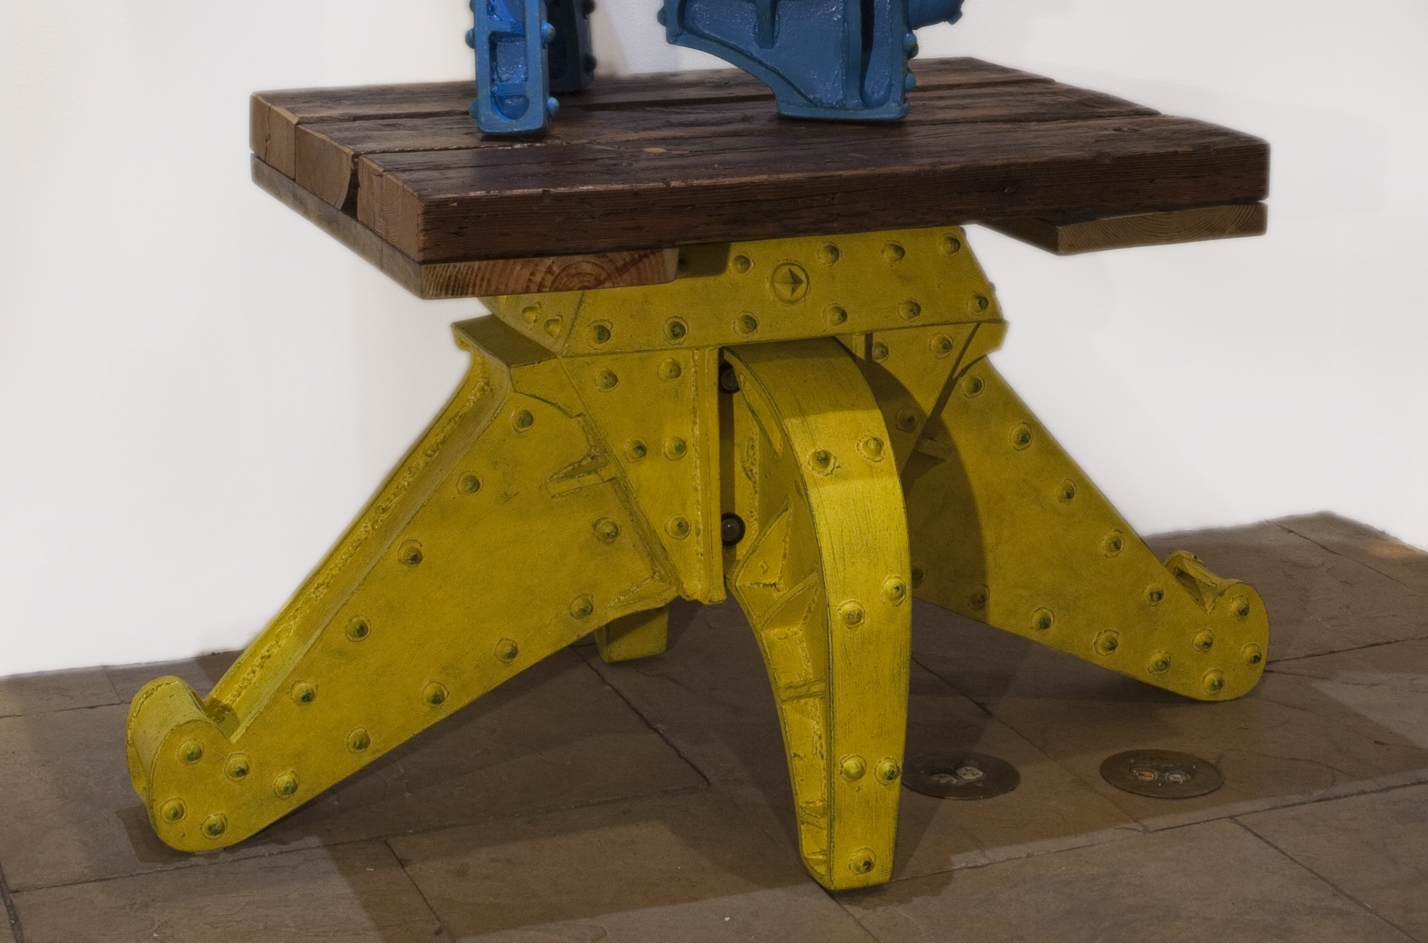 

											Doug Herren</b>

											<em>
												Selected Works</em> 

											<h4>
												Santa Fe: December 30 - March 18, 2023											</h4>

		                																																Doug Herren,  
																																								<i>Yellow Table Stand,</i>  
																																								2012, 
																																								ceramic, enamel paint, found wood, 
																																								30 x 32 x 60 inches 
																								
		                				